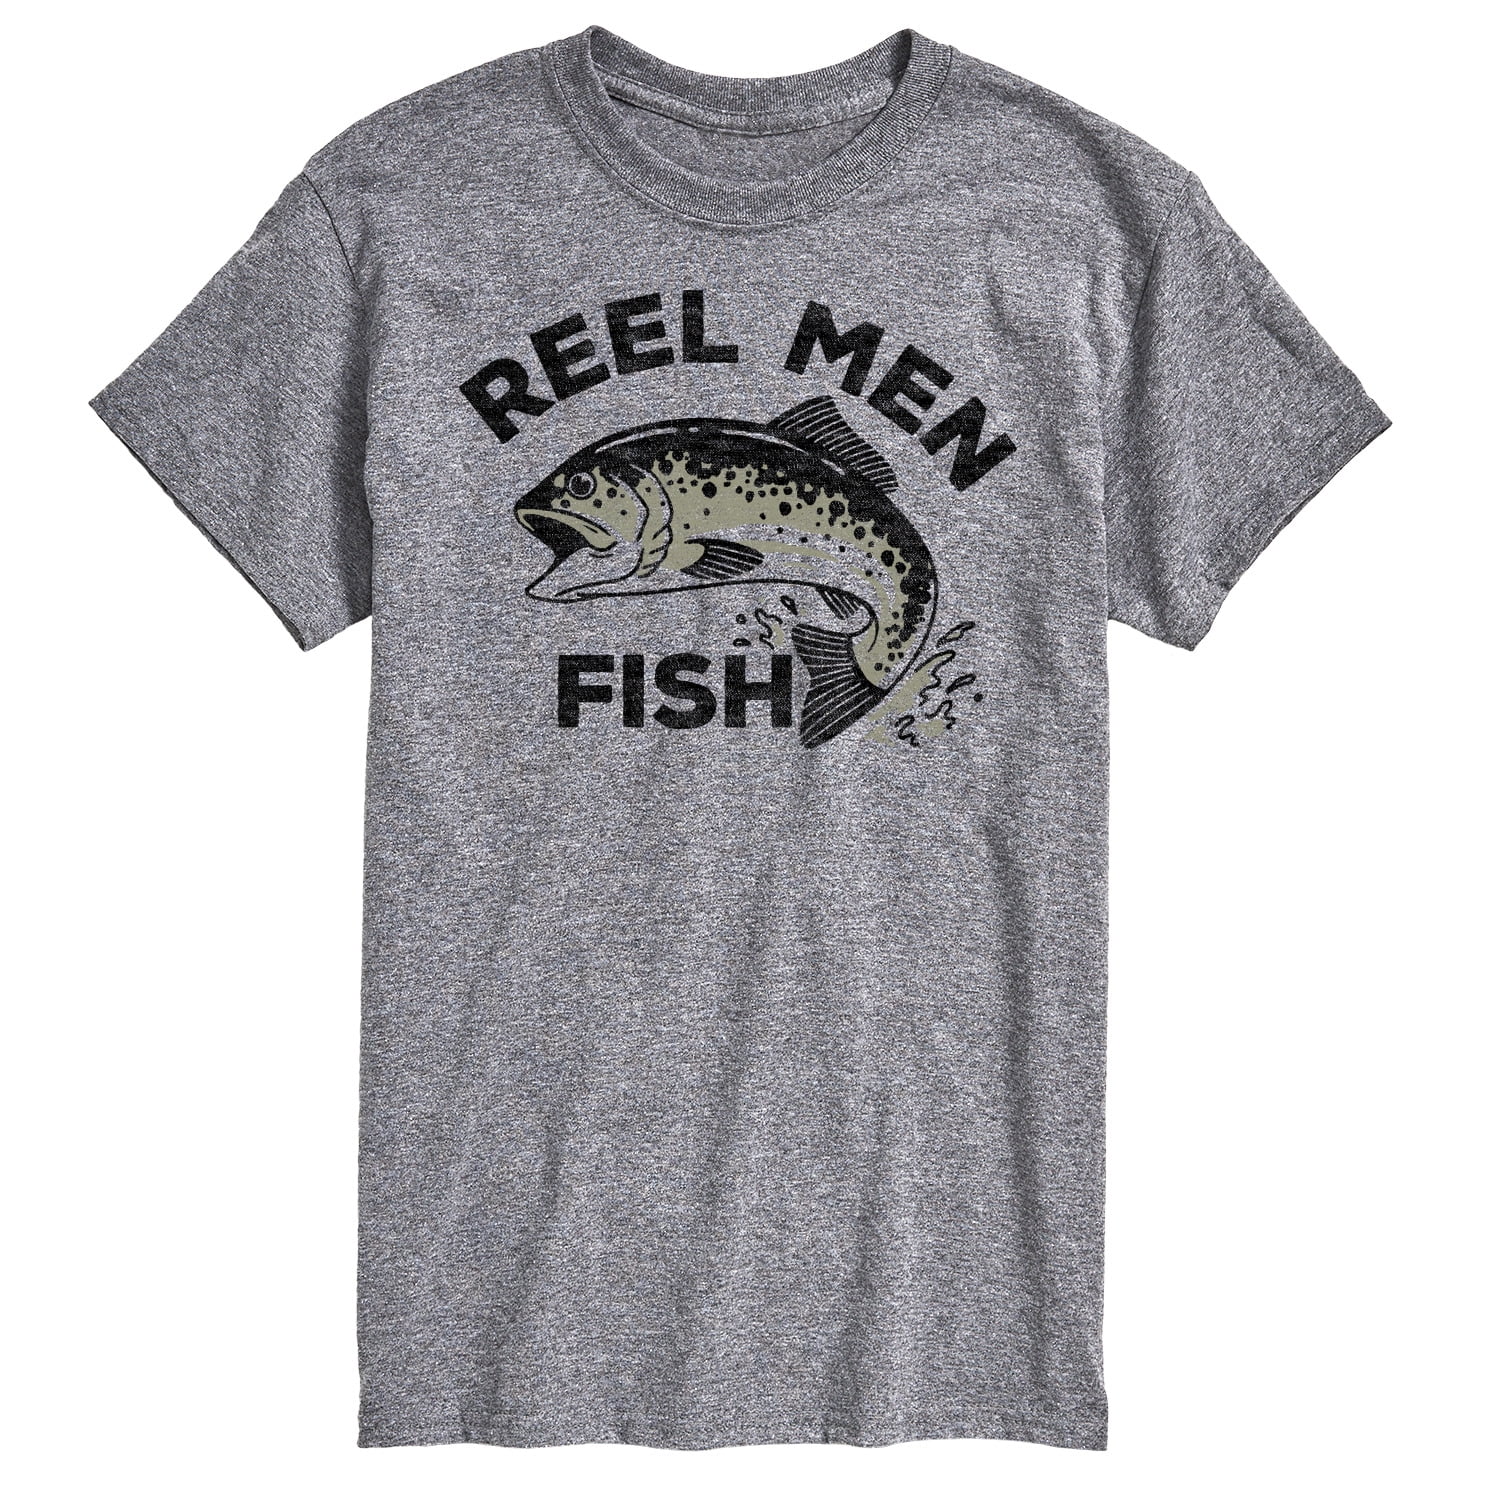 Instant Message - Reel Men Fish - Men's Short Sleeve Graphic T-Shirt 